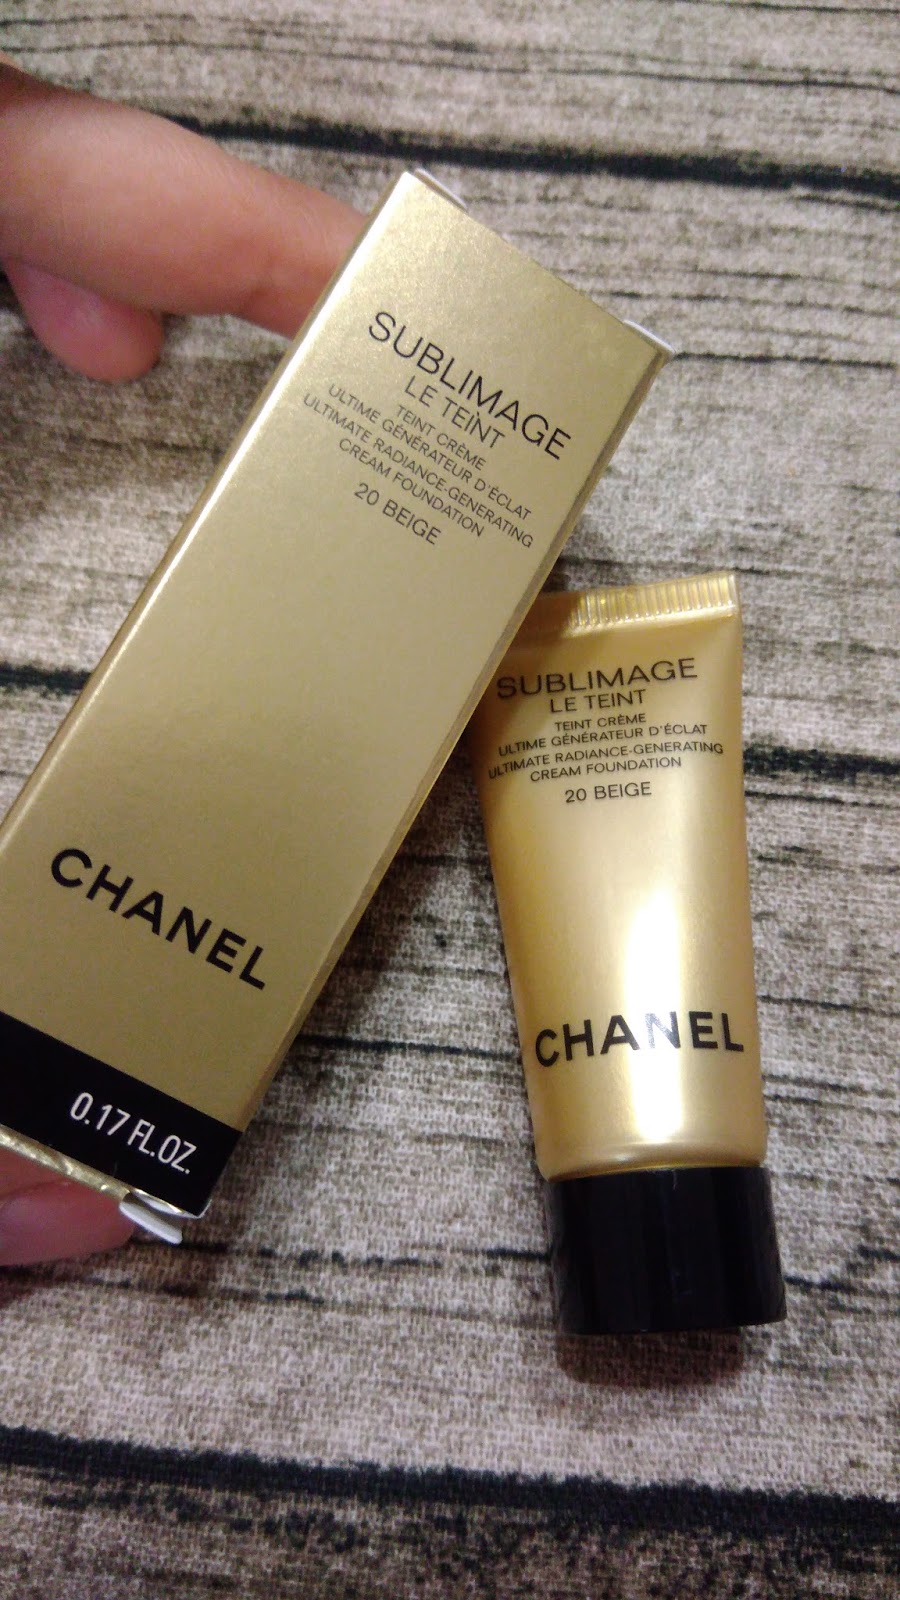 Chanel Sublimage Le Teint Ultimate Radiance-Generating Cream Foundation - # 30  Beige 1 oz Foundation 